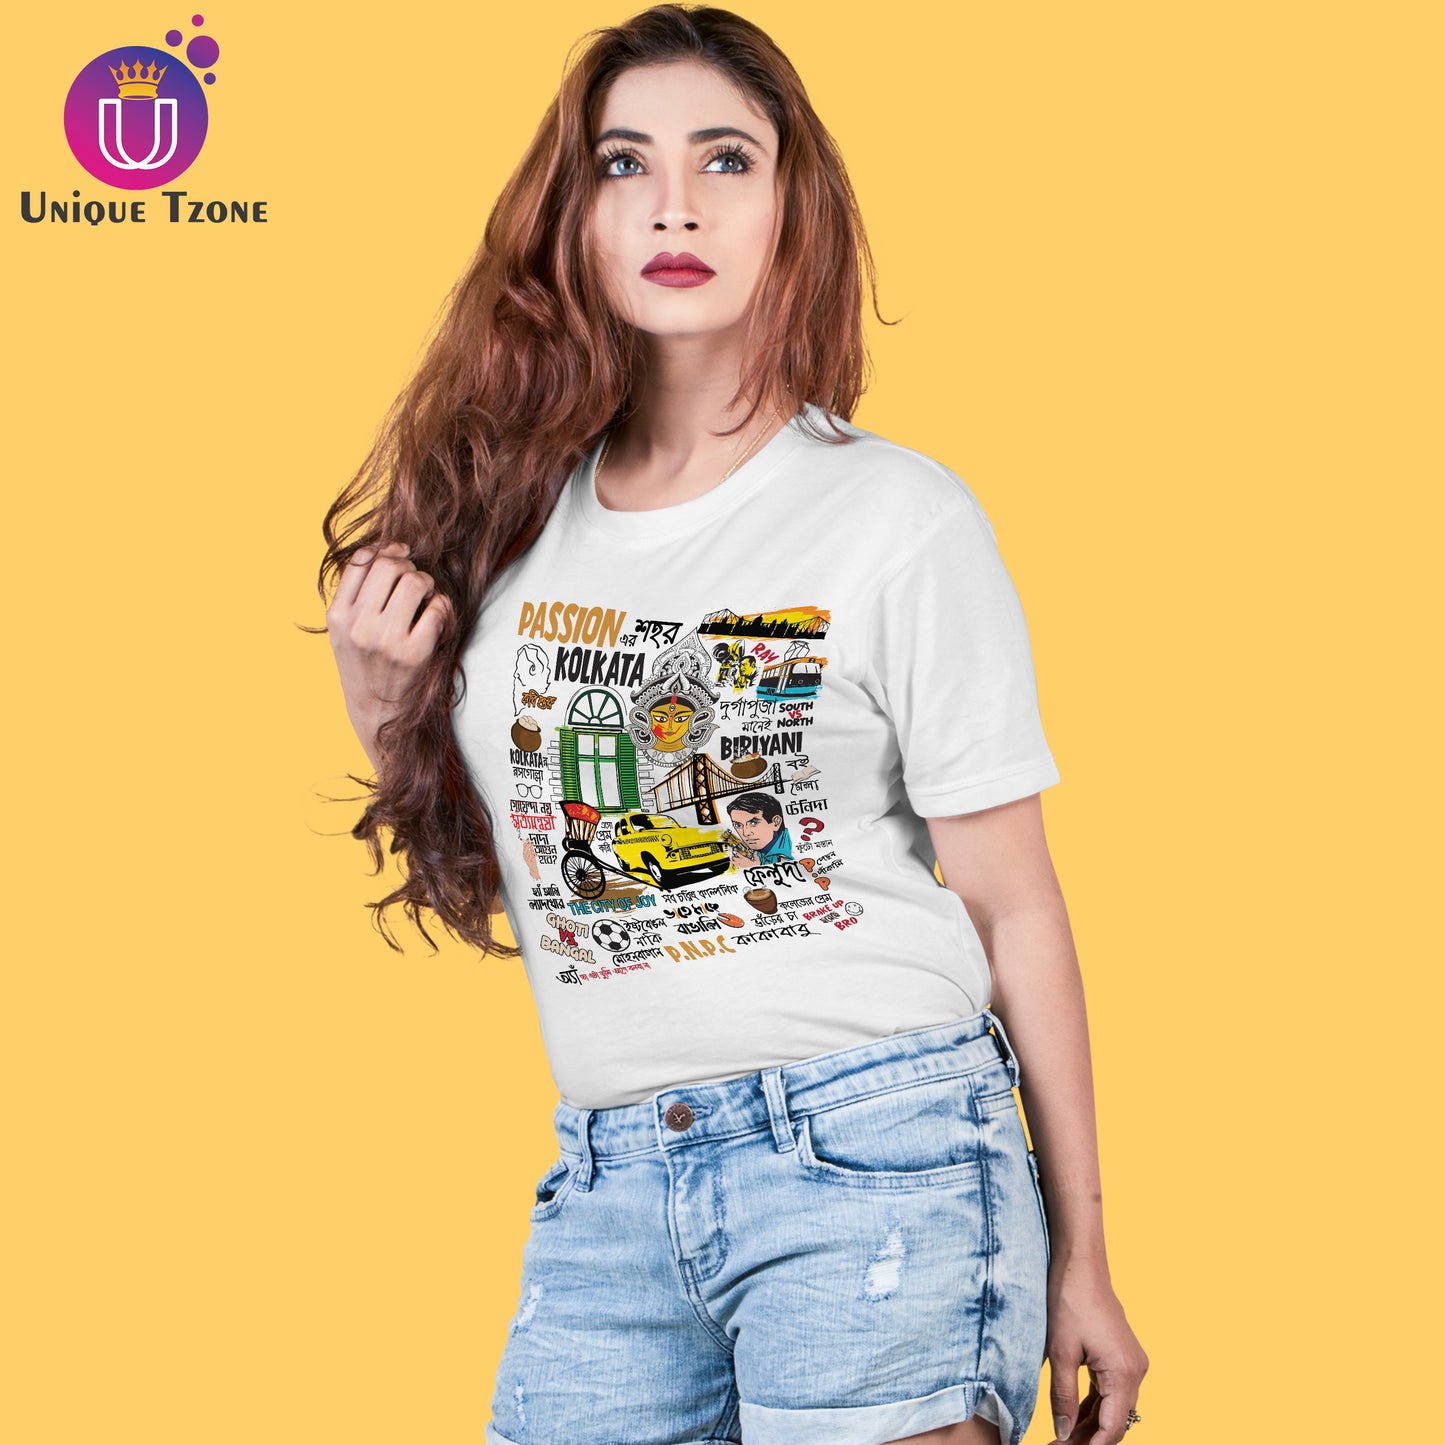 Passioner Sohor Kolkata Bengali Premium Graphics Round Neck Half Sleeve Cotton Tshirt